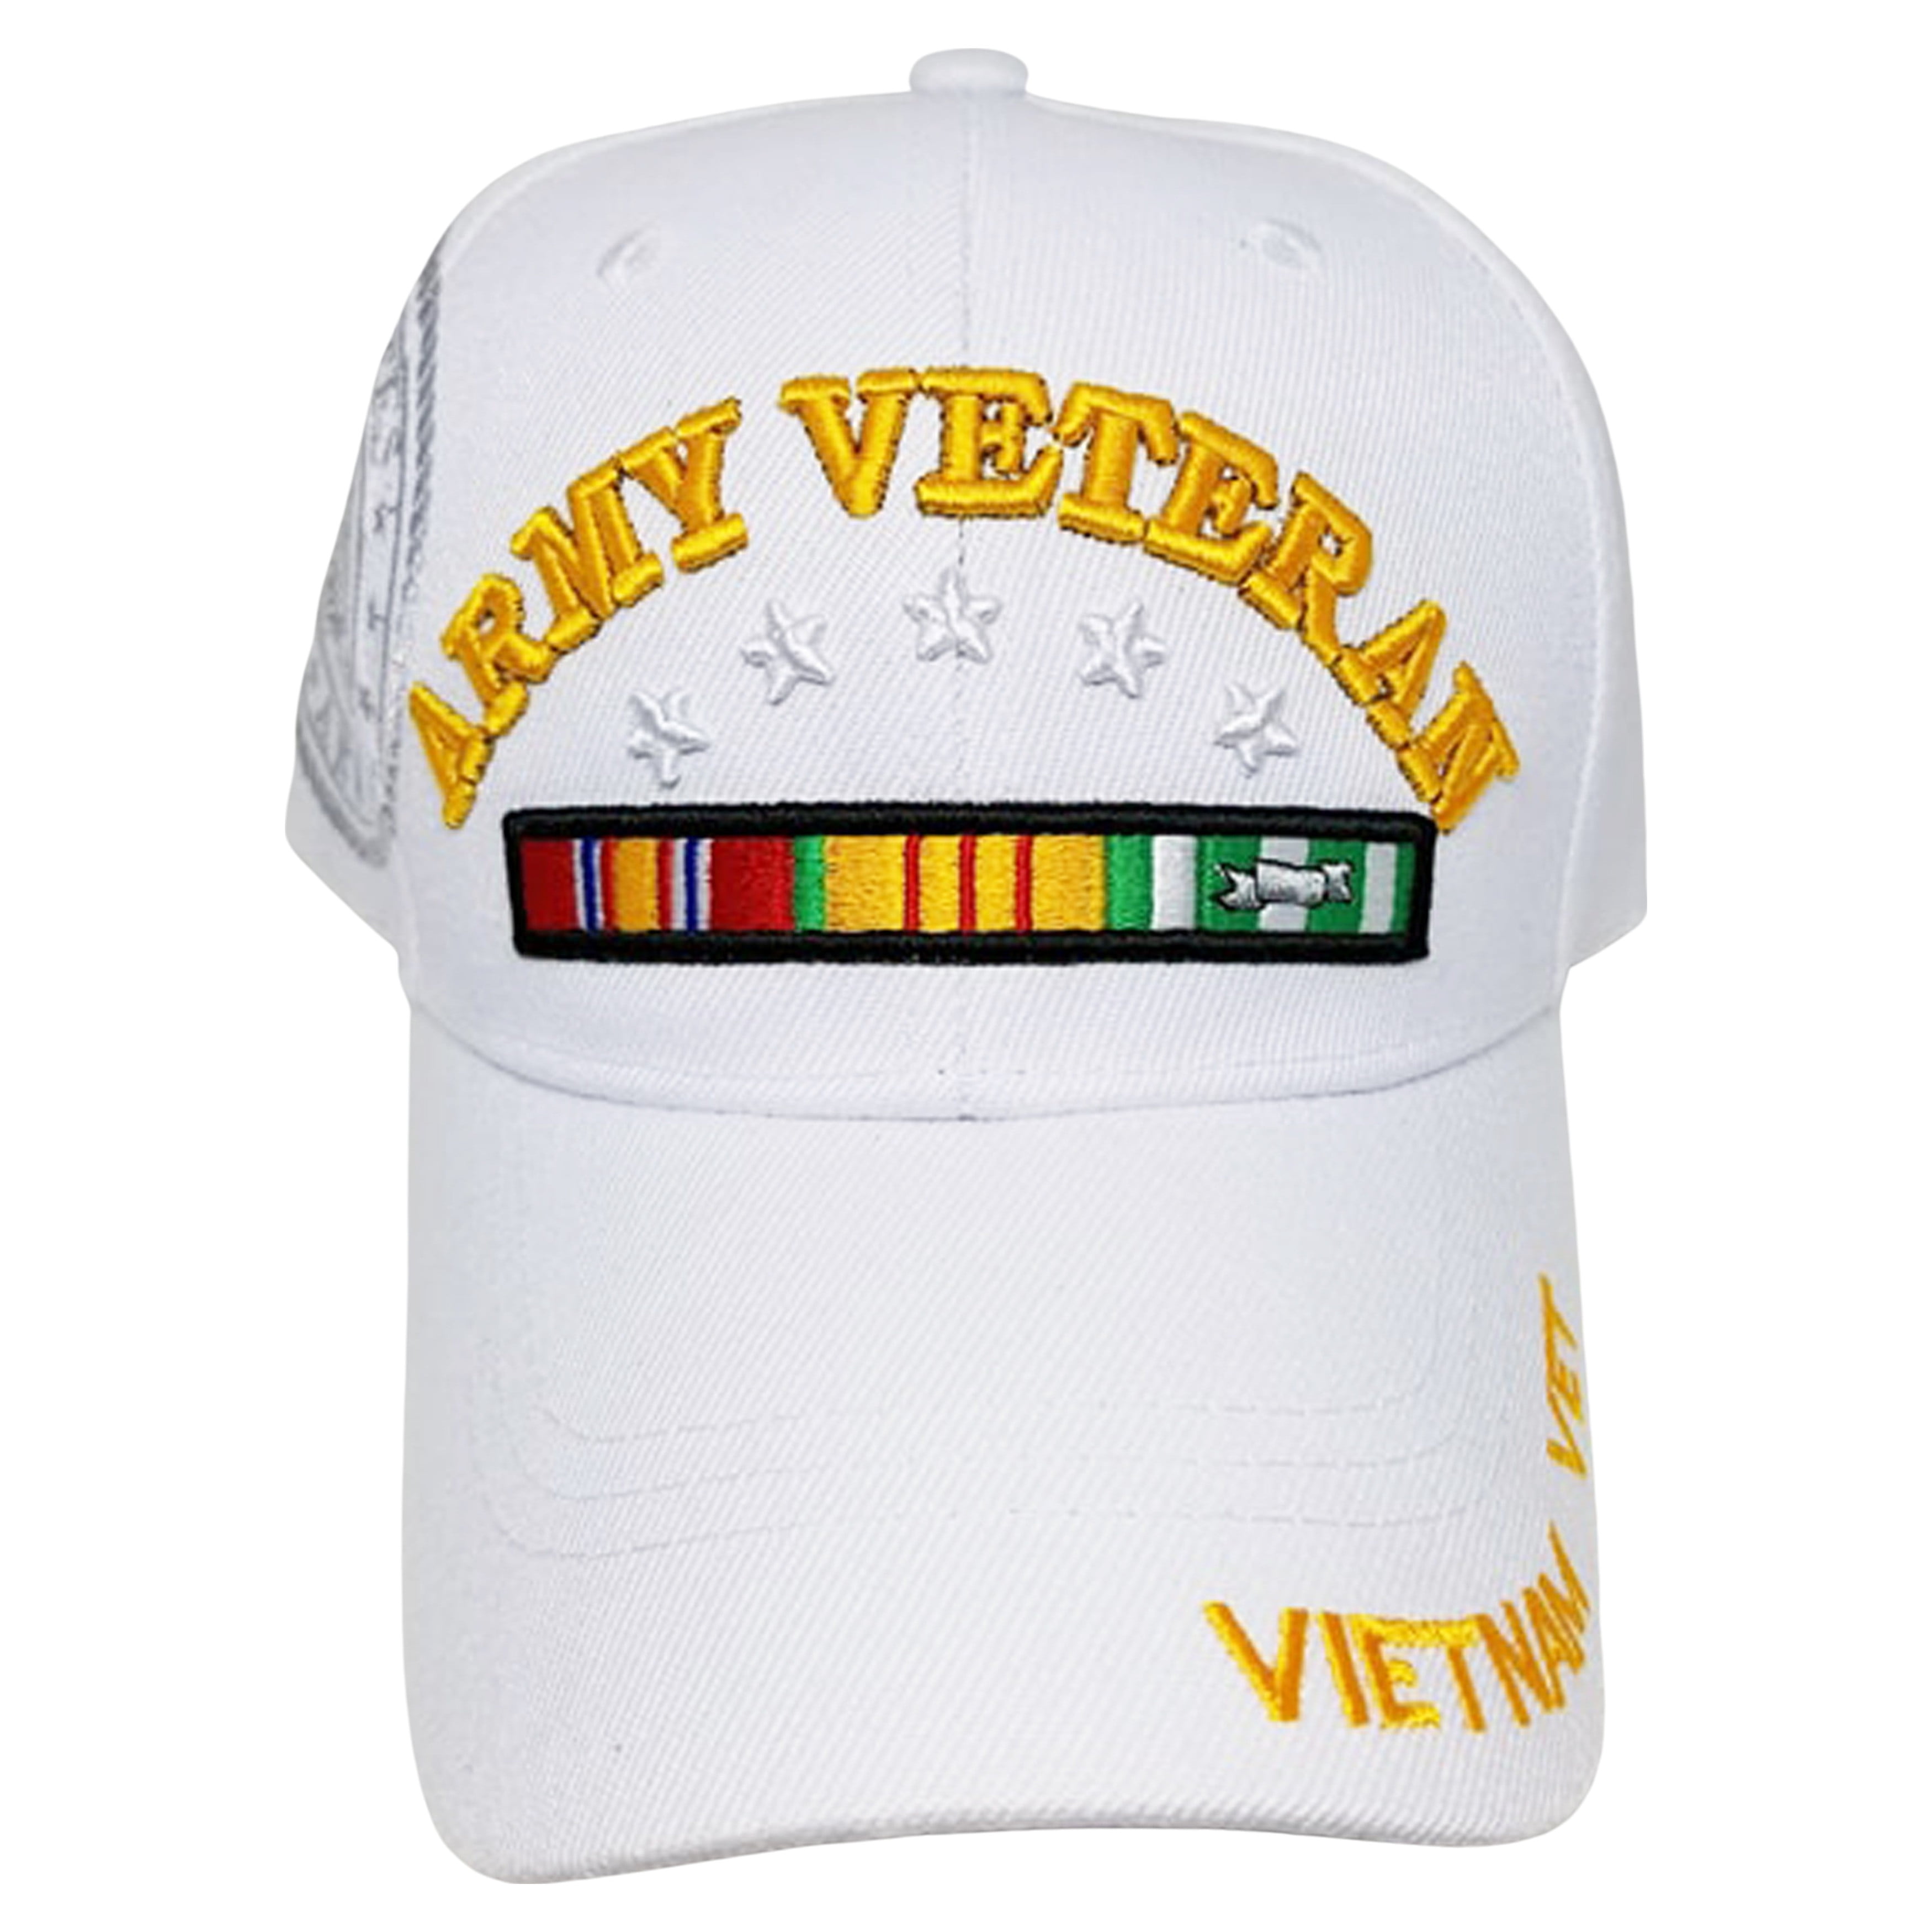 Vietnam Veteran Baseball Cap Mens Embroidered White Gold Ball Military - Walmart.com